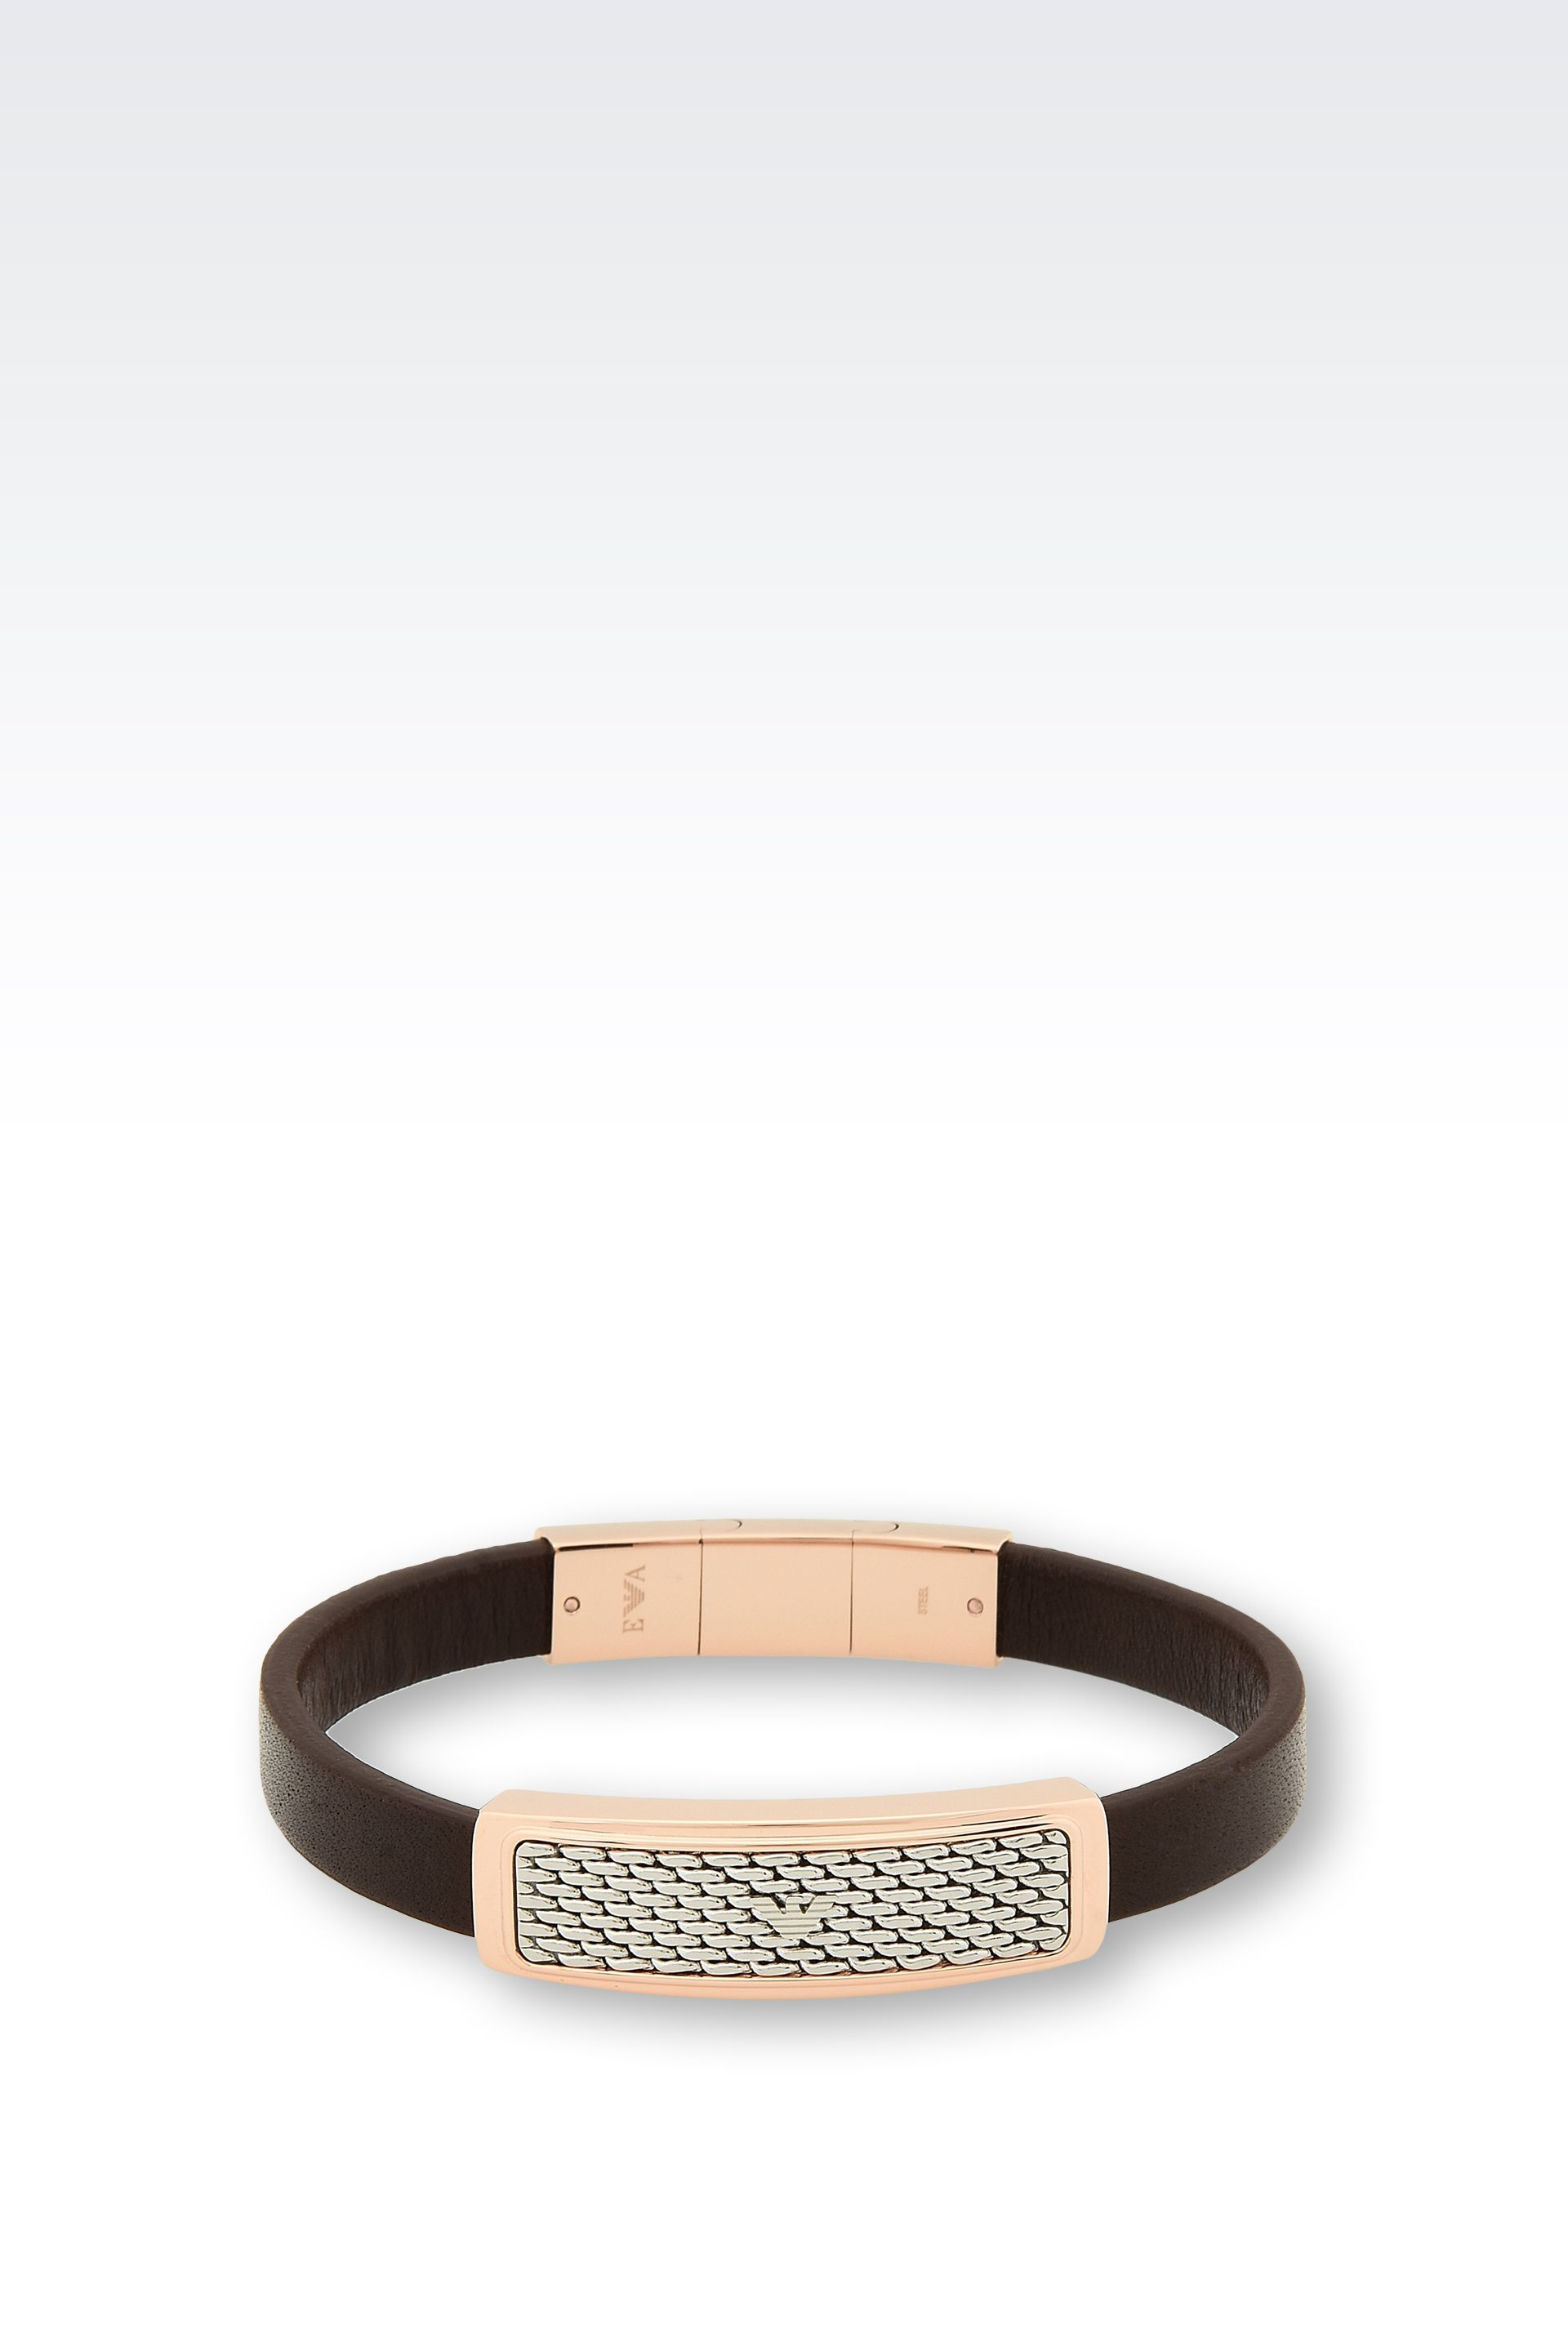 Emporio Armani Signature Woven Leather & Rose Gold Bracelet EGS2177221